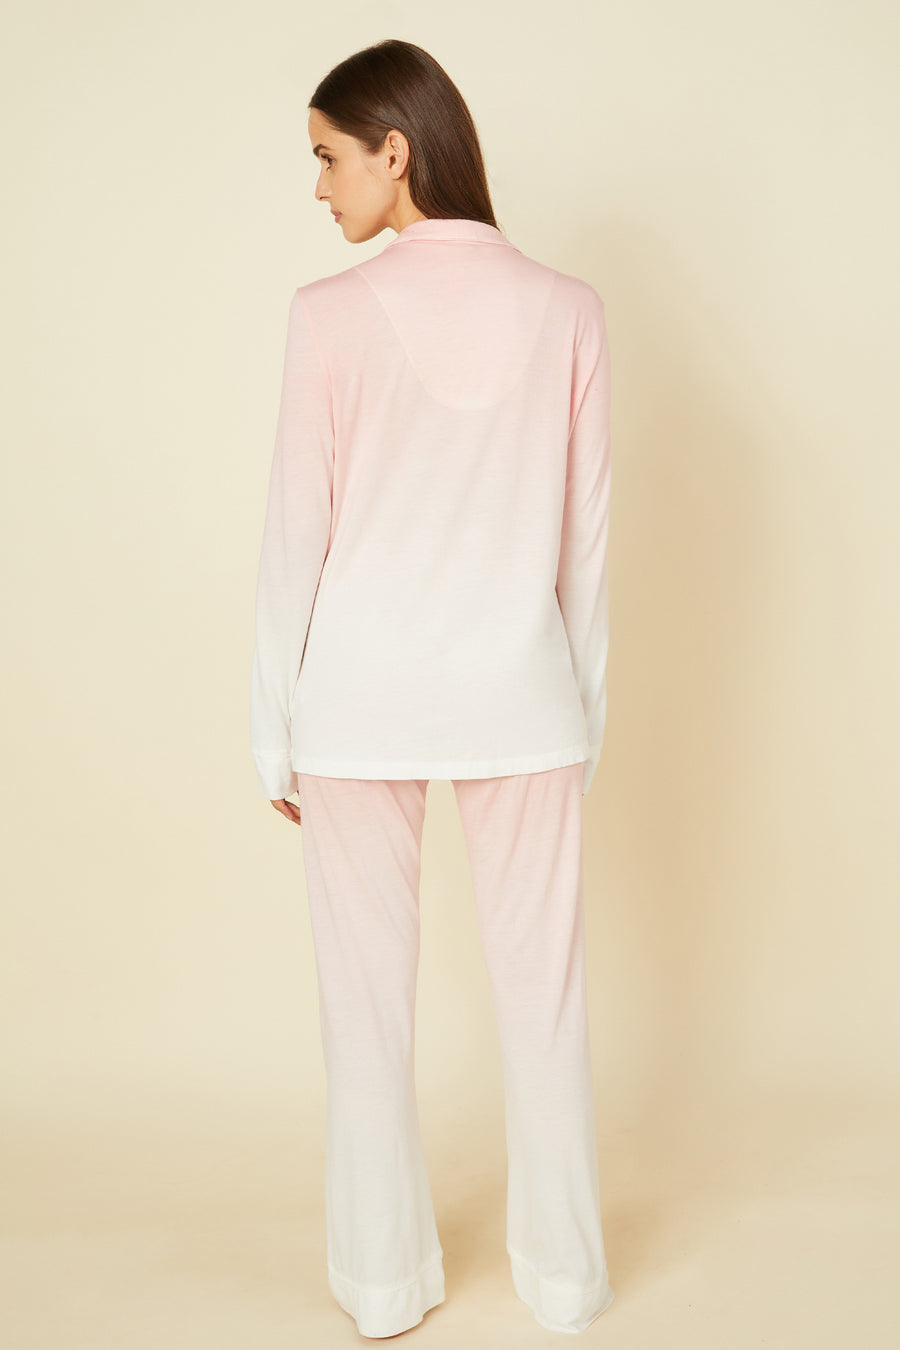 Pink Set - Bella Printed Petite Printed Longsleeve Top And Pant